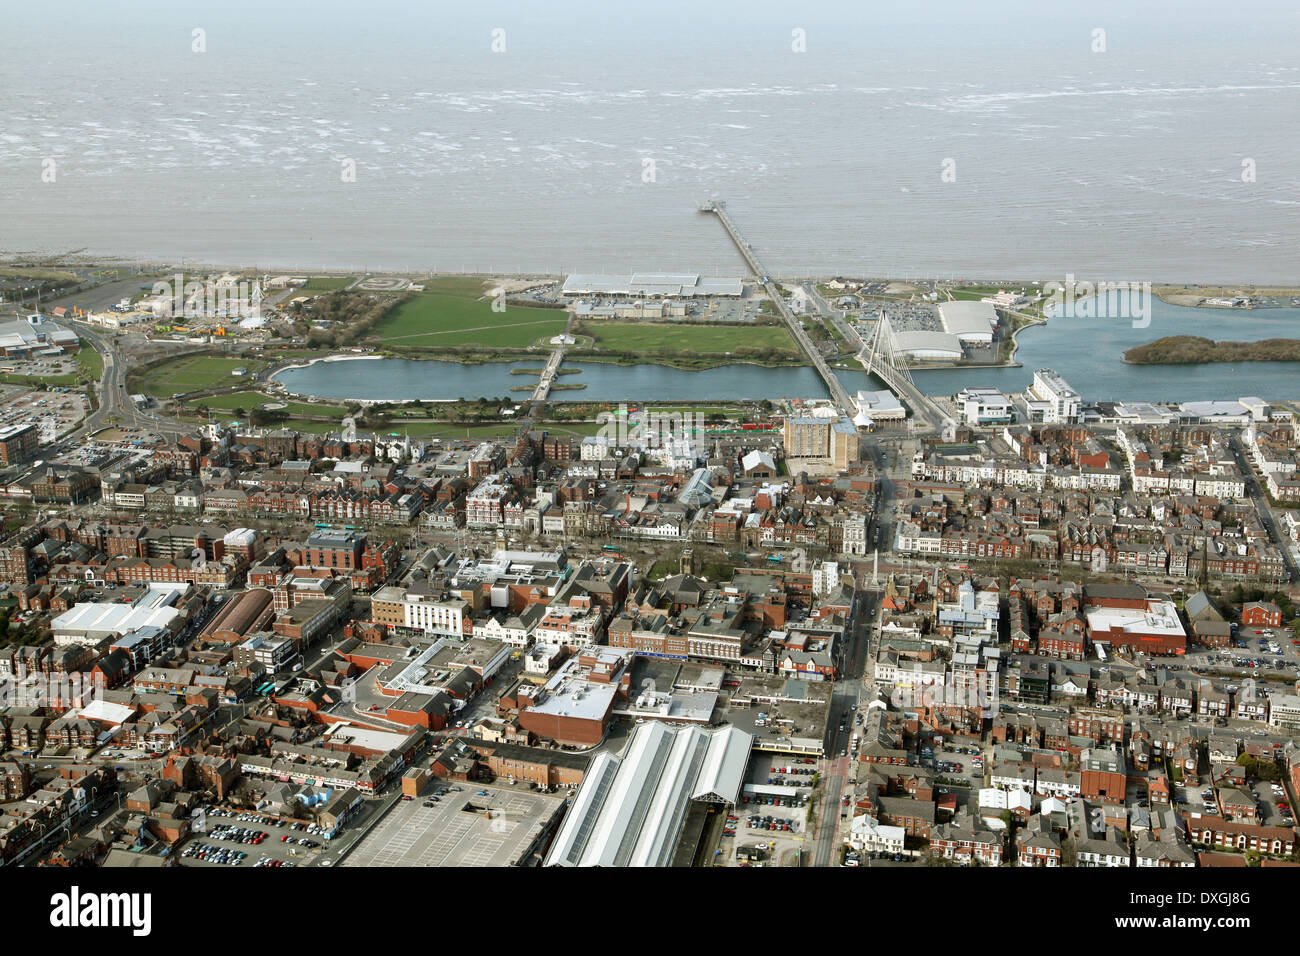 Vista aérea de la ciudad costera de Southport, Lancashire Foto de stock